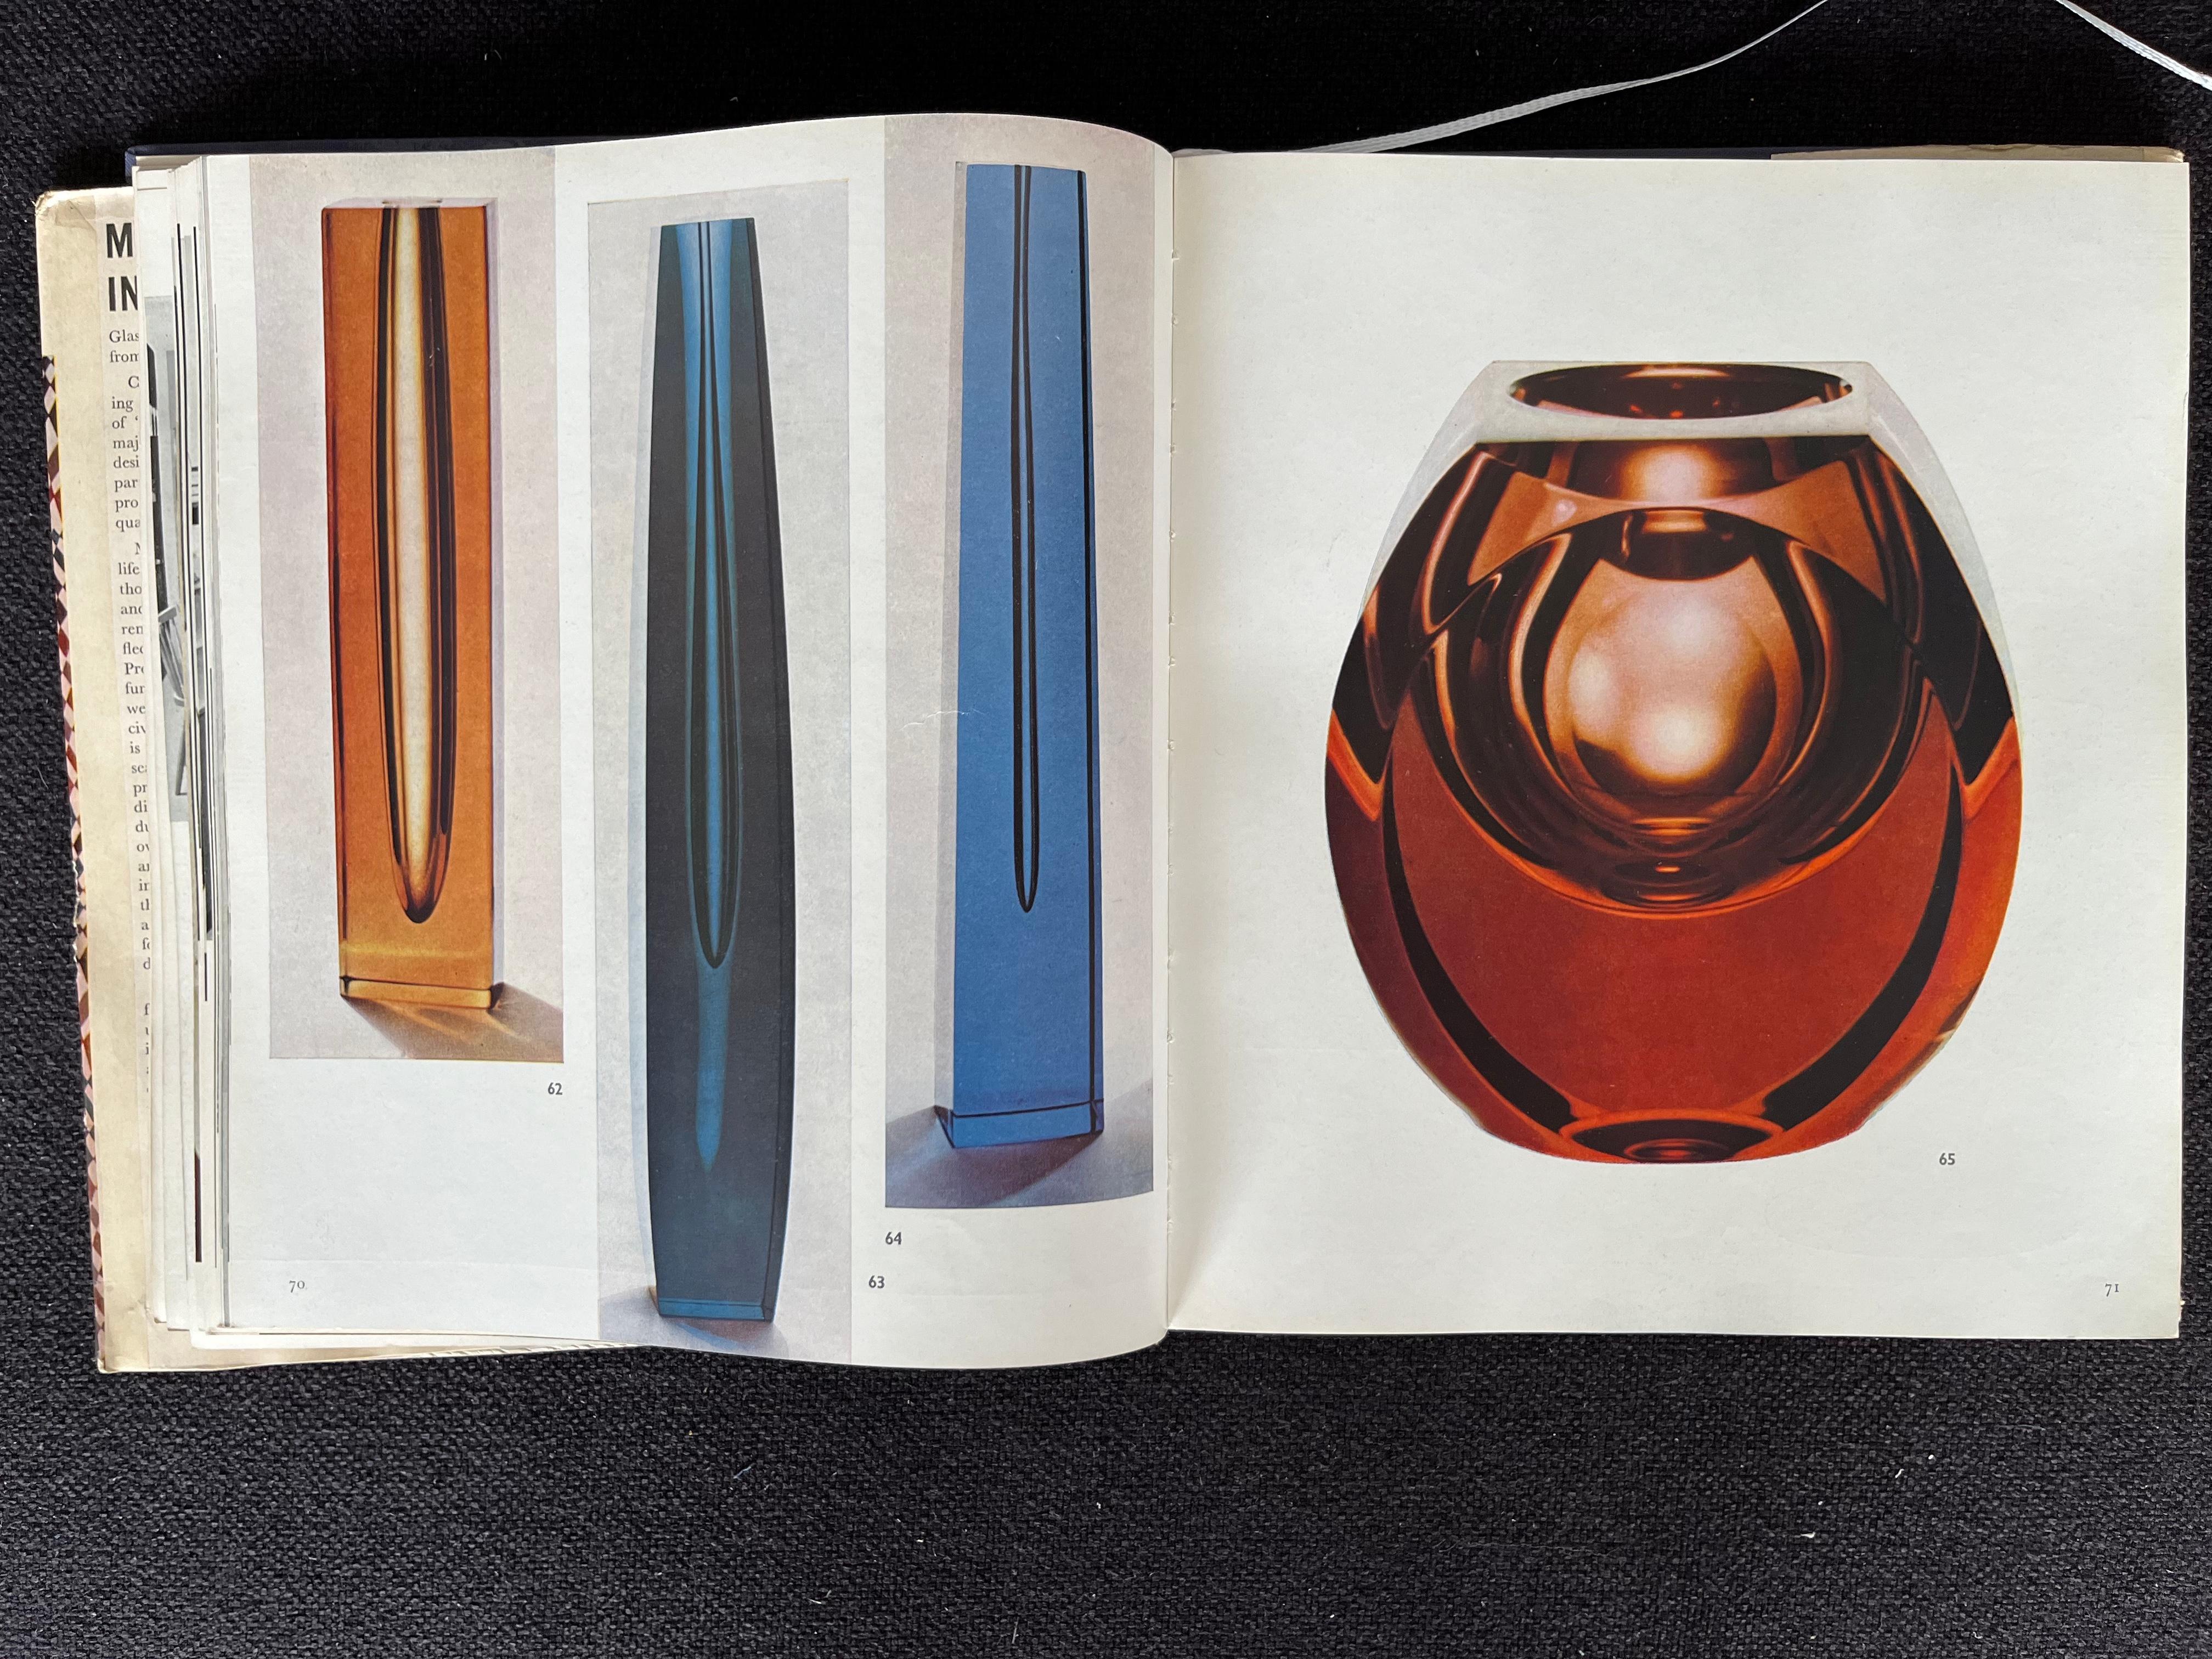 - 1965
- designer : Miroslav Rada
- Artia Praha
- English version
- original condition, see the photos
- 207 pages
- many beautiful pictures
- jr.